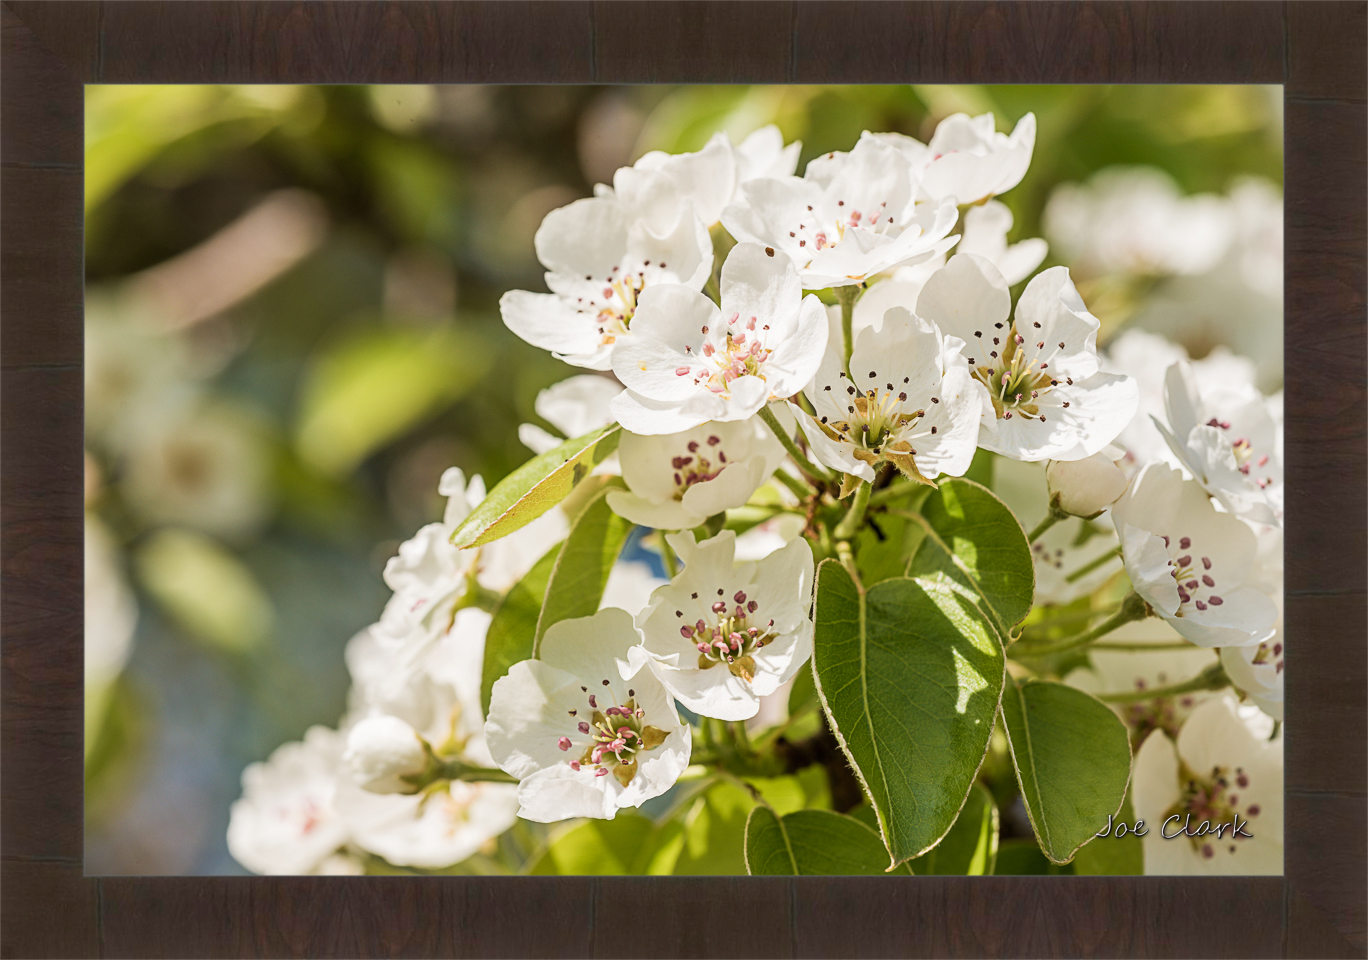 Apple Blossom 2 by Joe Clark R60545